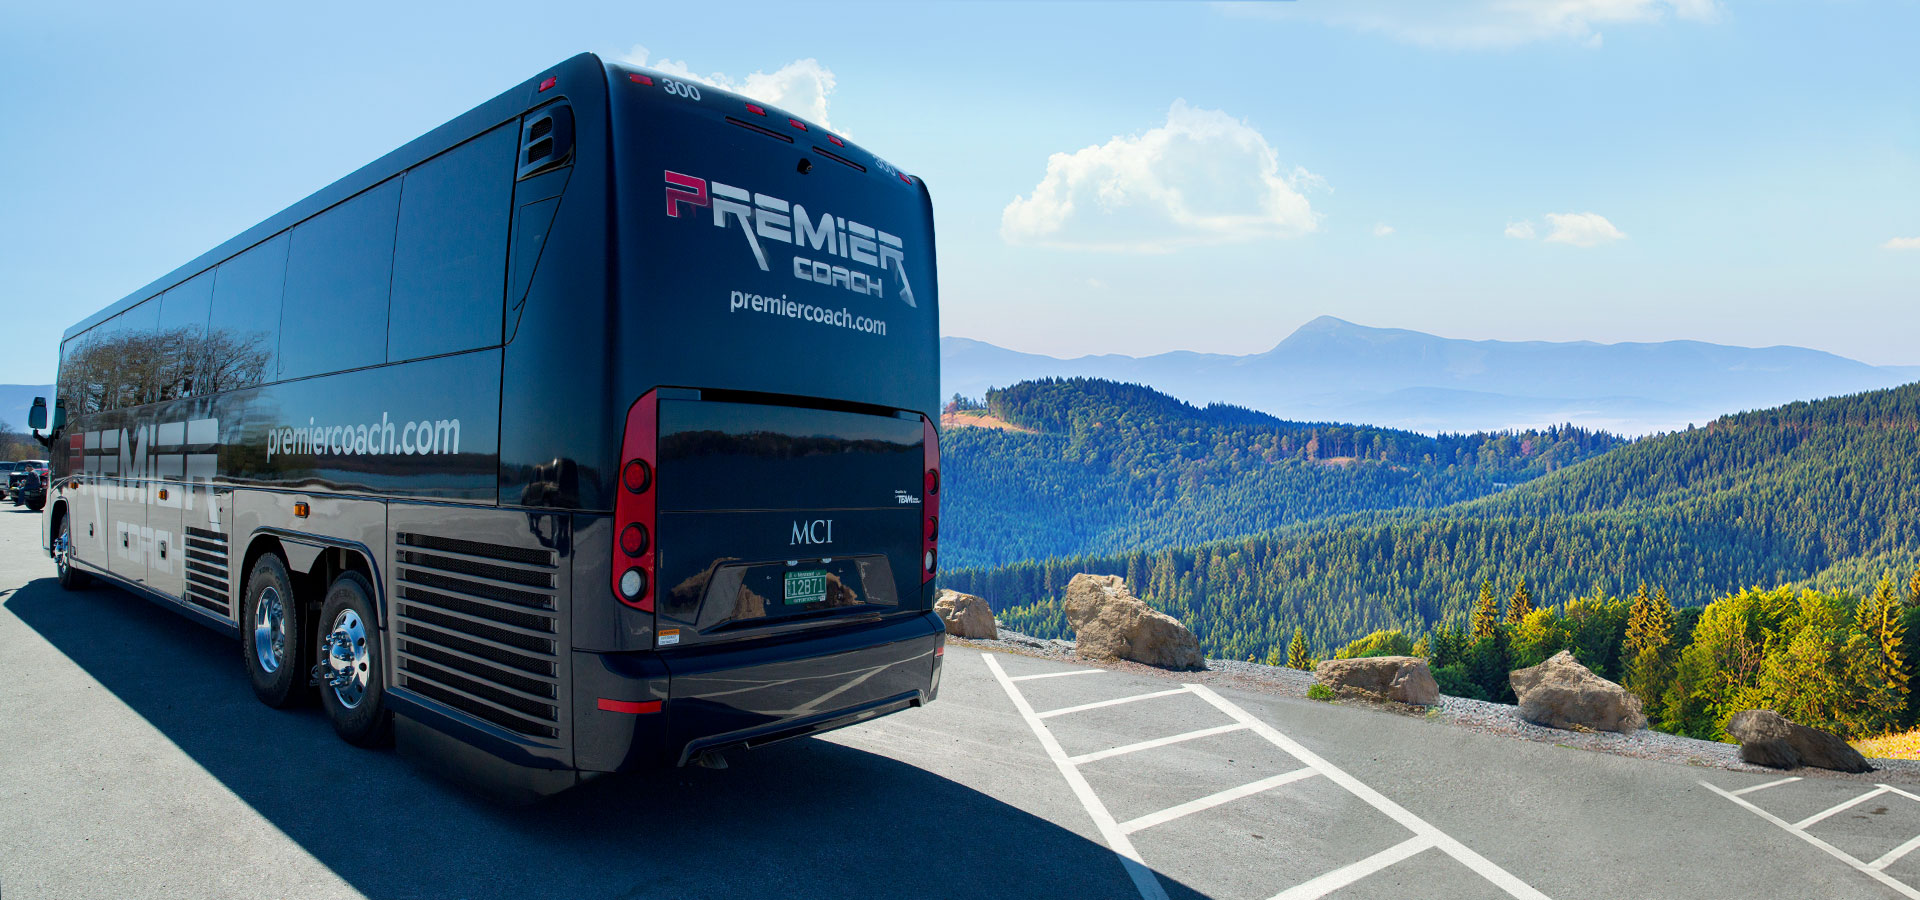 premier travel coach holidays